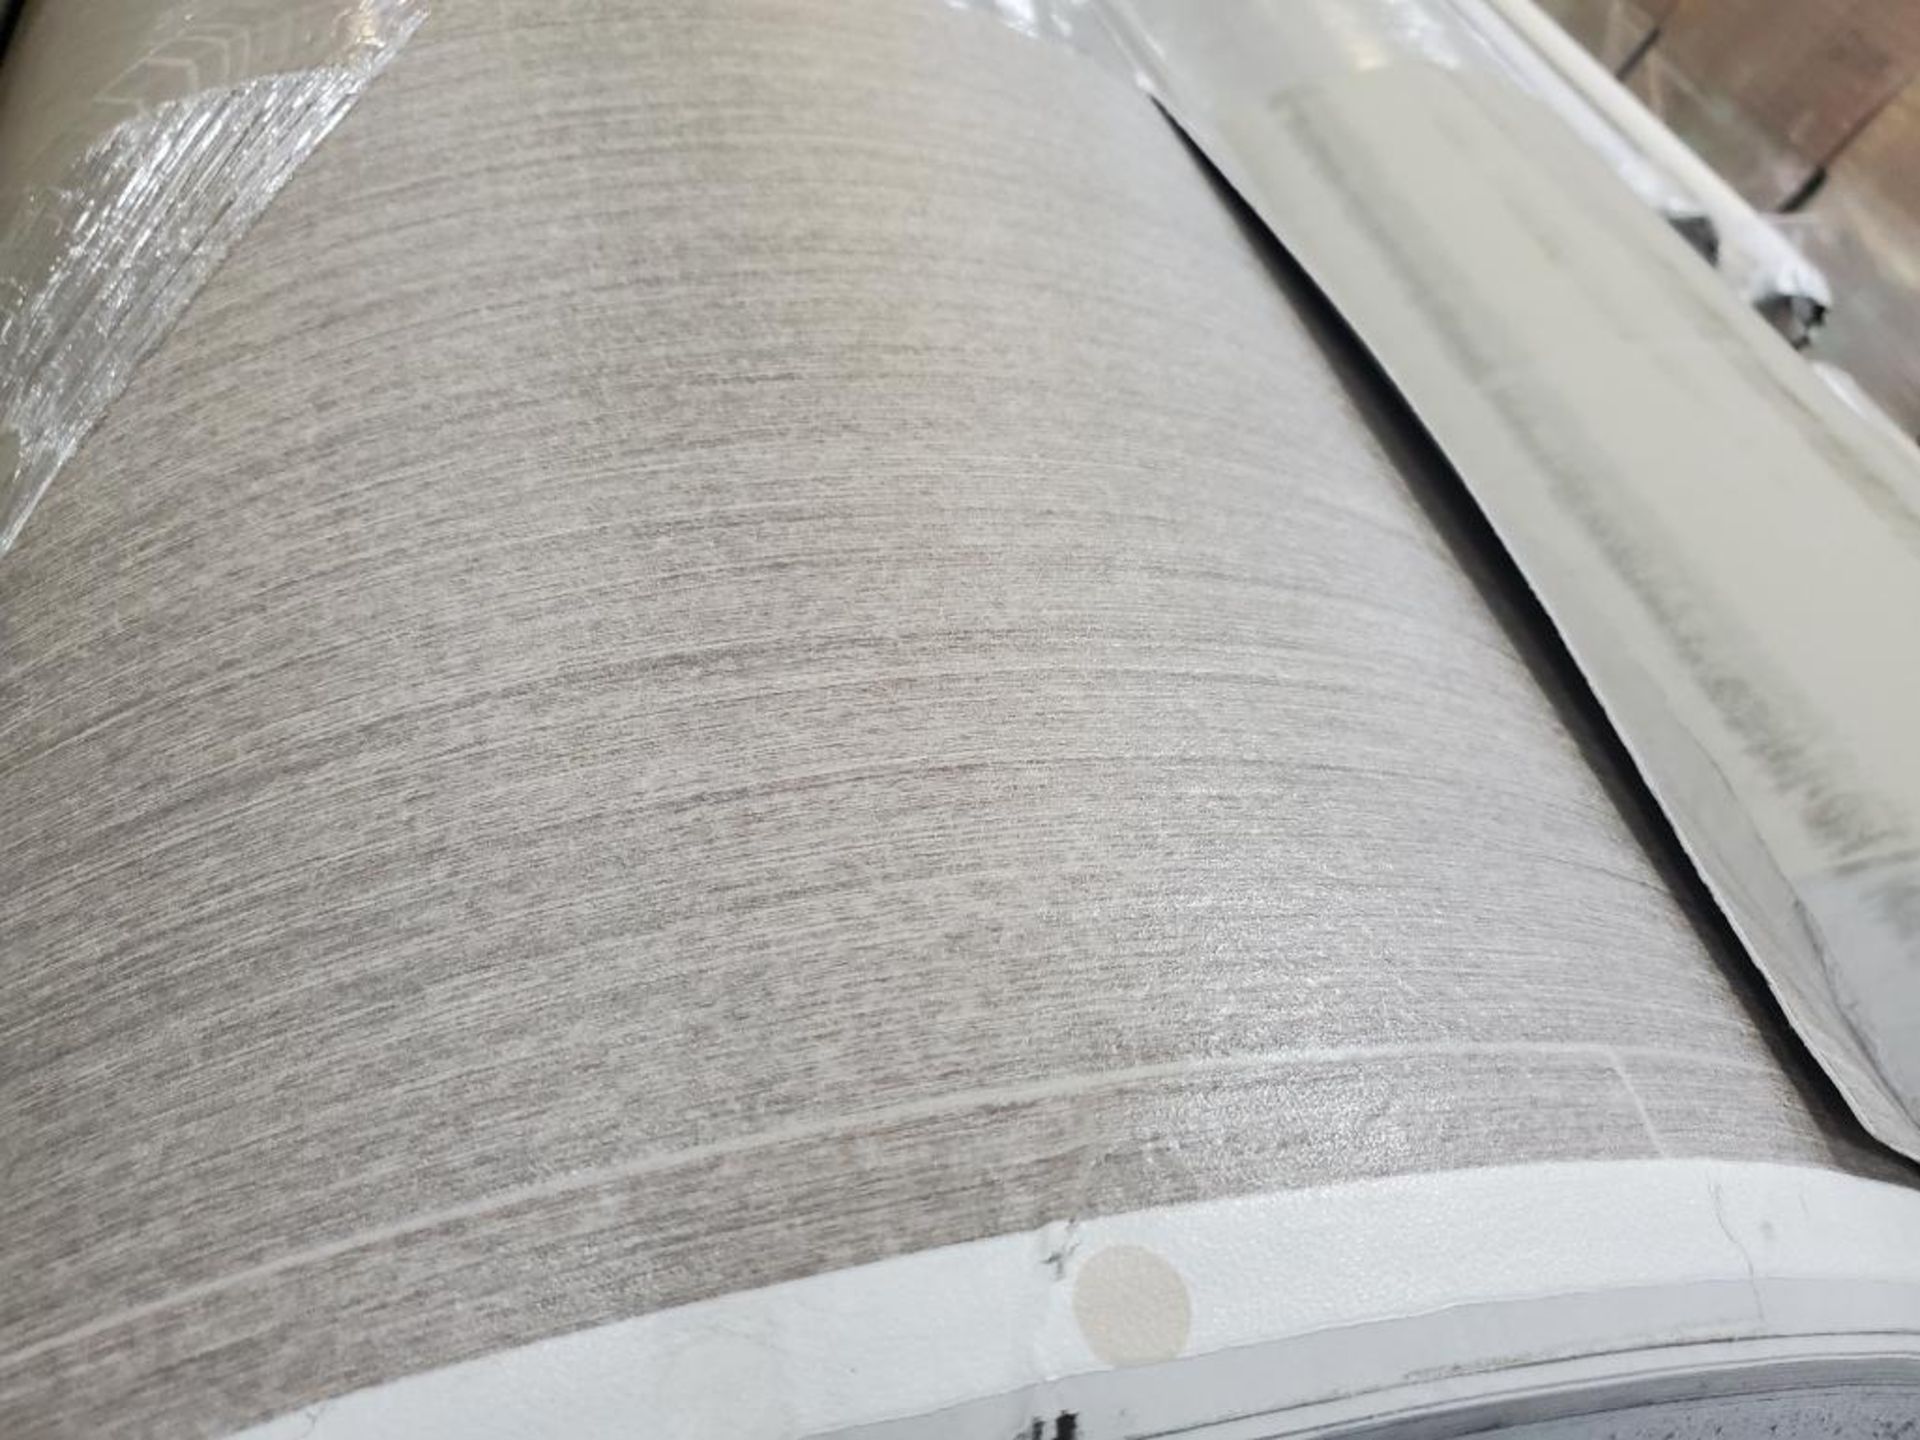 Qty 4 rolls - Luxury vinyl flooring. Roll width range 8'2" to 8'6". - Image 7 of 7